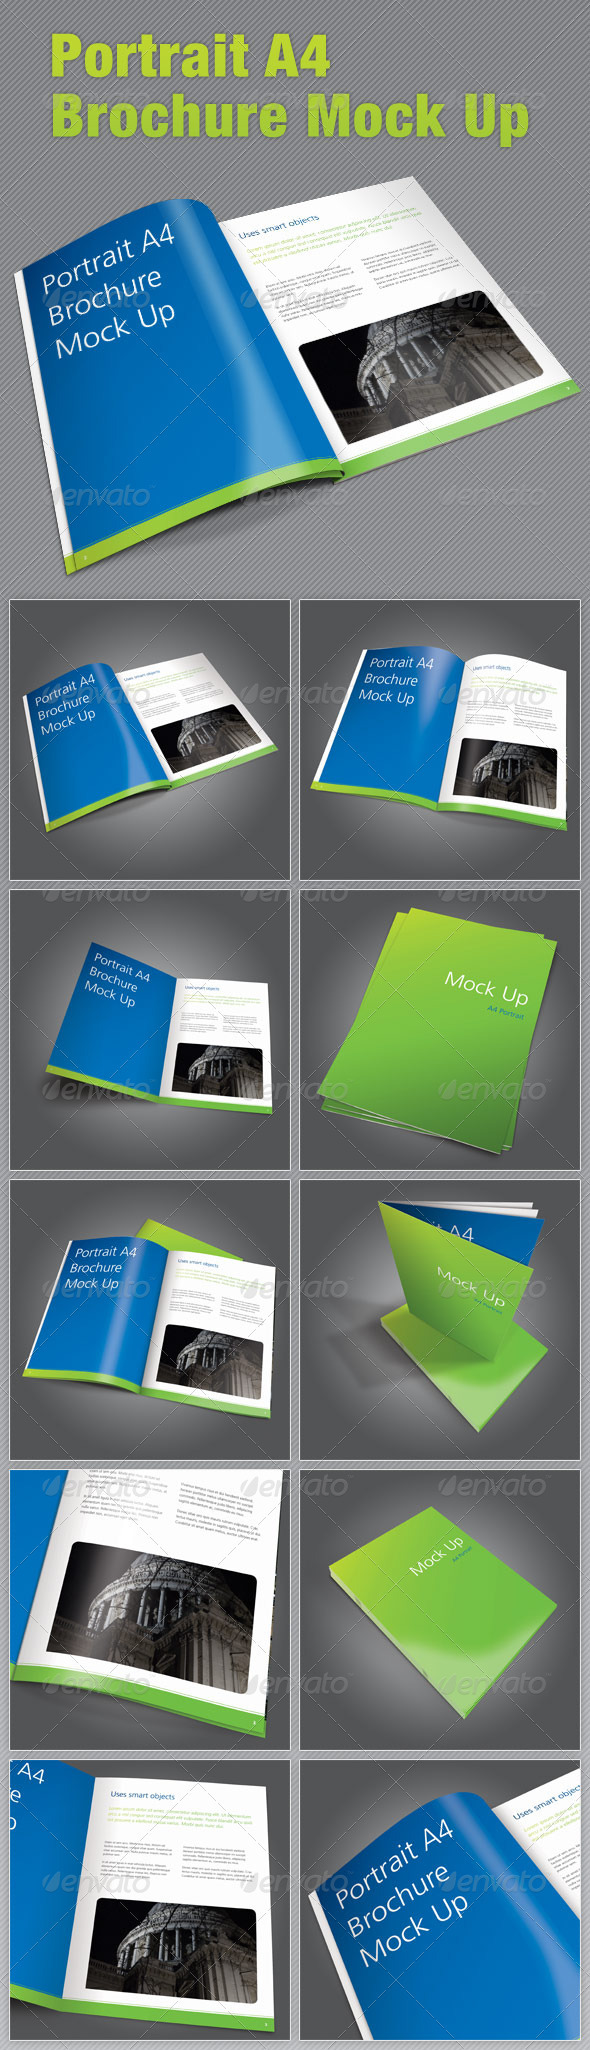 Download A4 Brochure Mockup Portrait Graphics Designs Templates